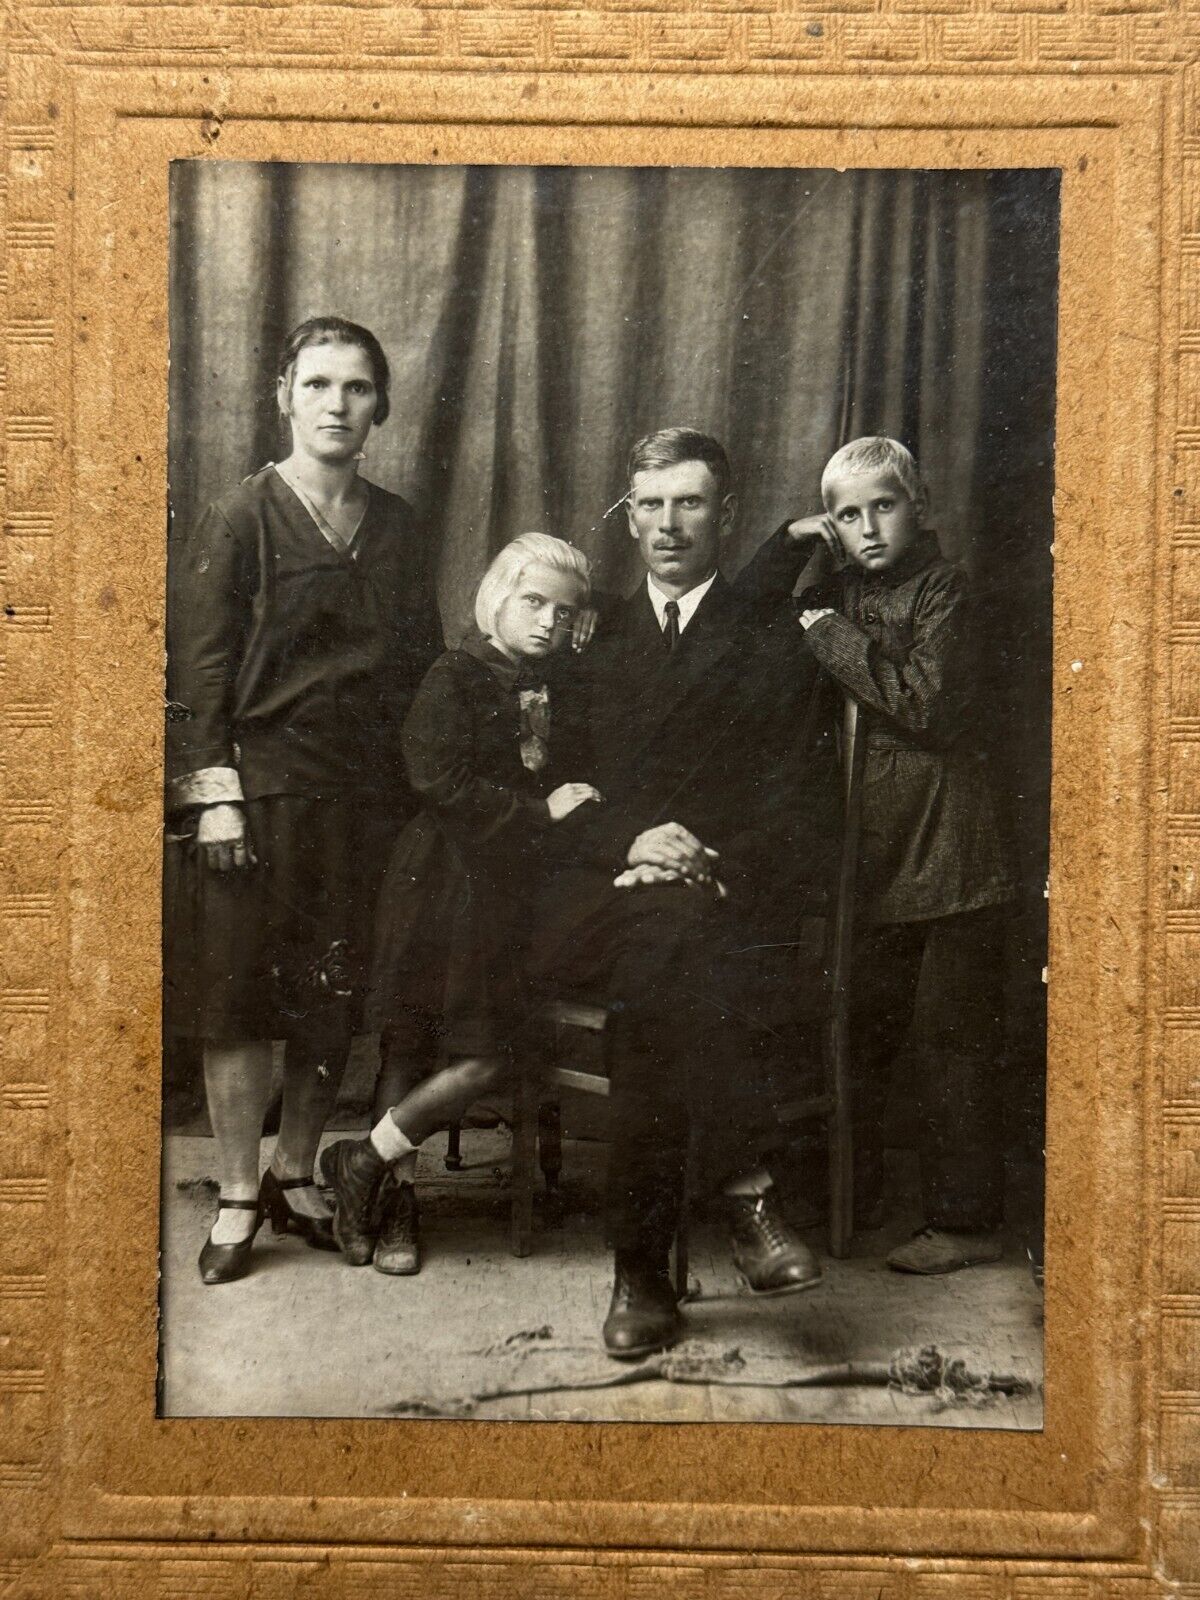 1932 Ukrainian Family Children Man Woman Vintage B&W Photo Snapshot